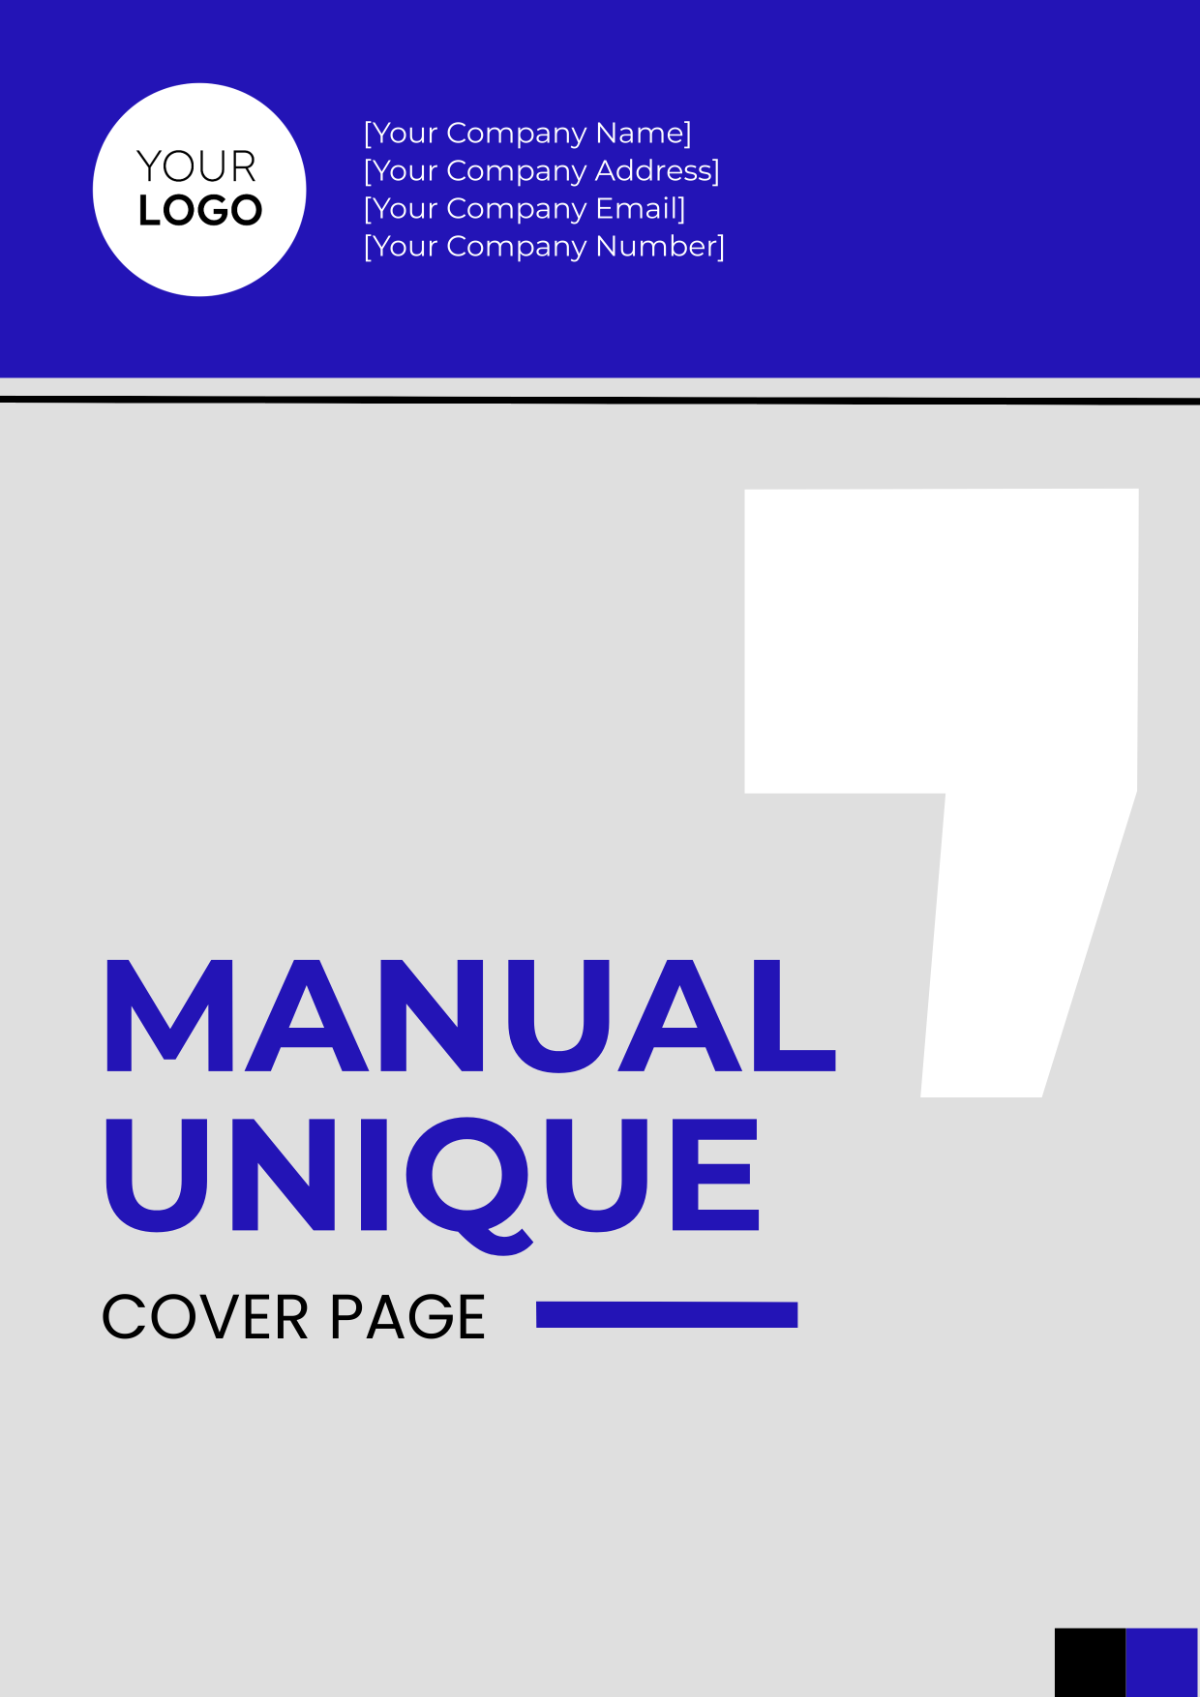 Manual Unique Cover Page